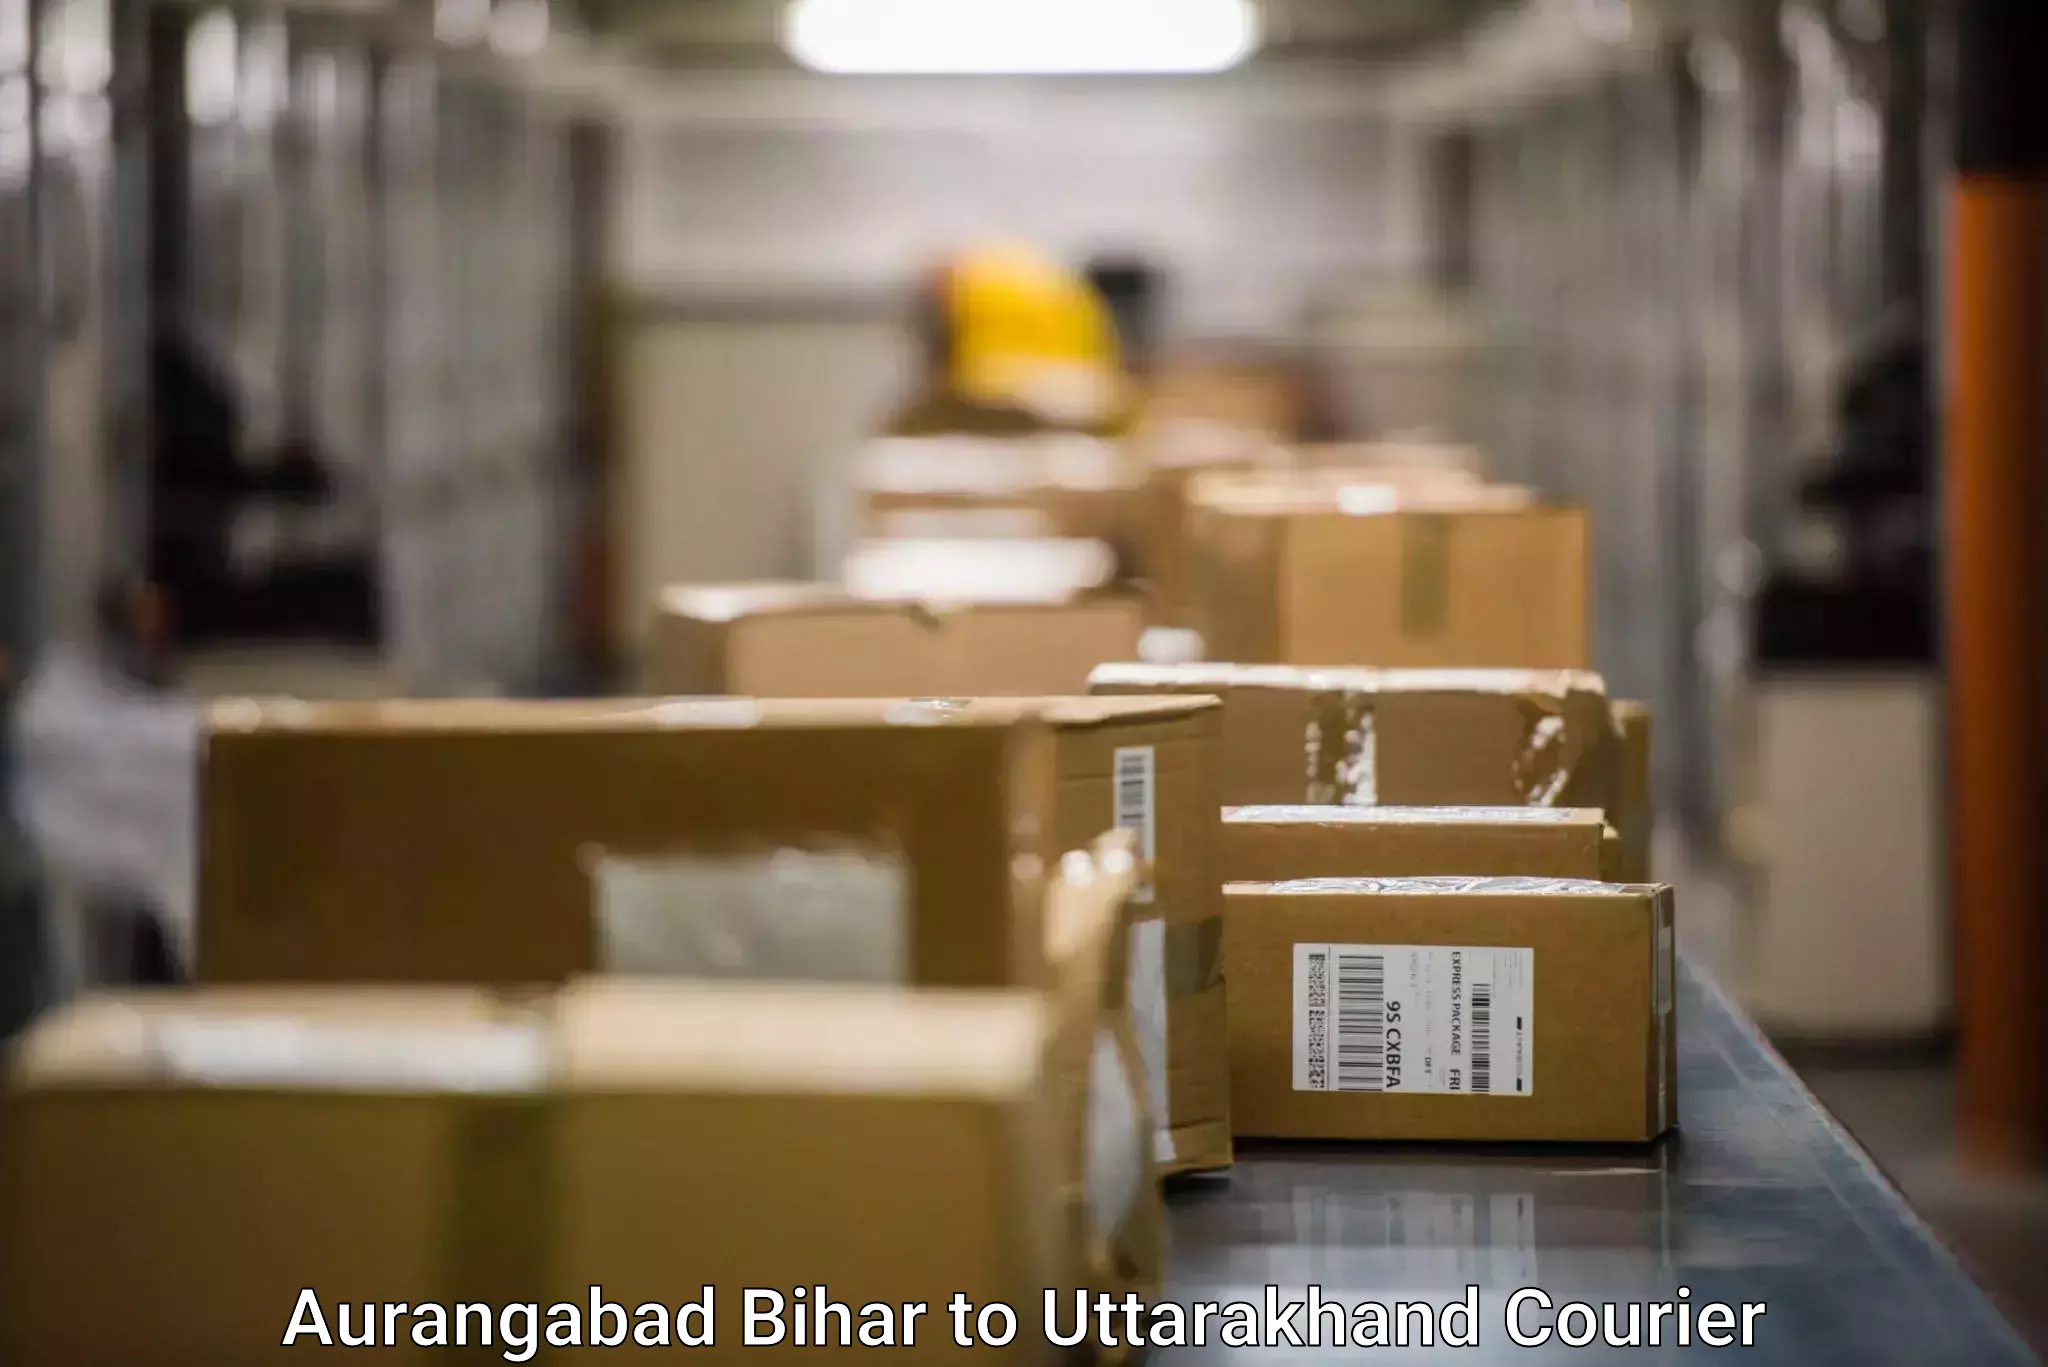 Ground shipping Aurangabad Bihar to Almora